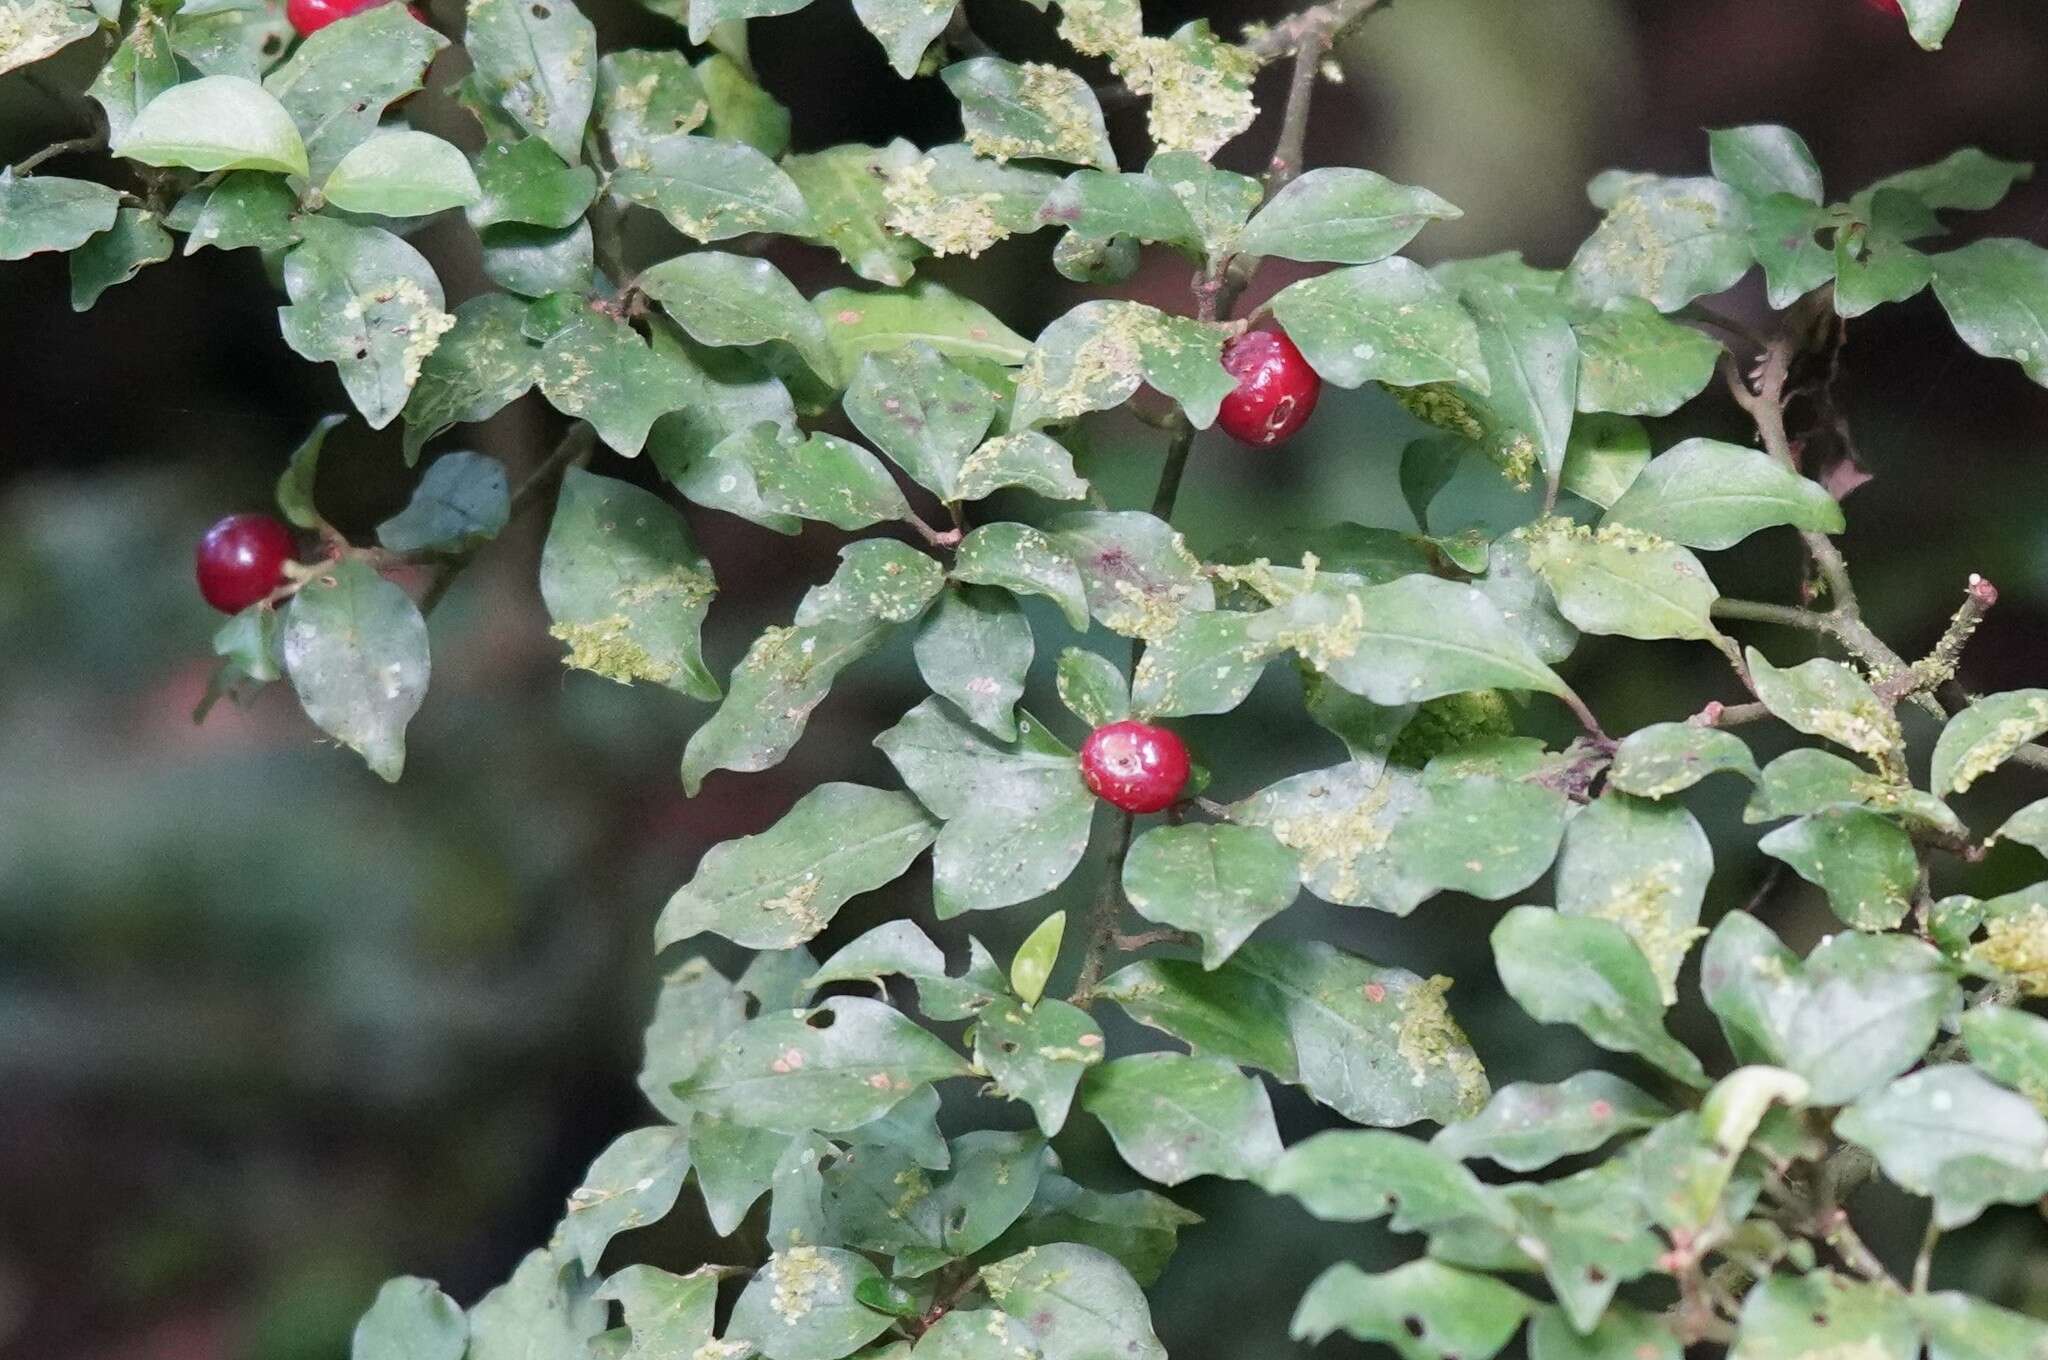 Image of Psychotria parvifolia Benth.